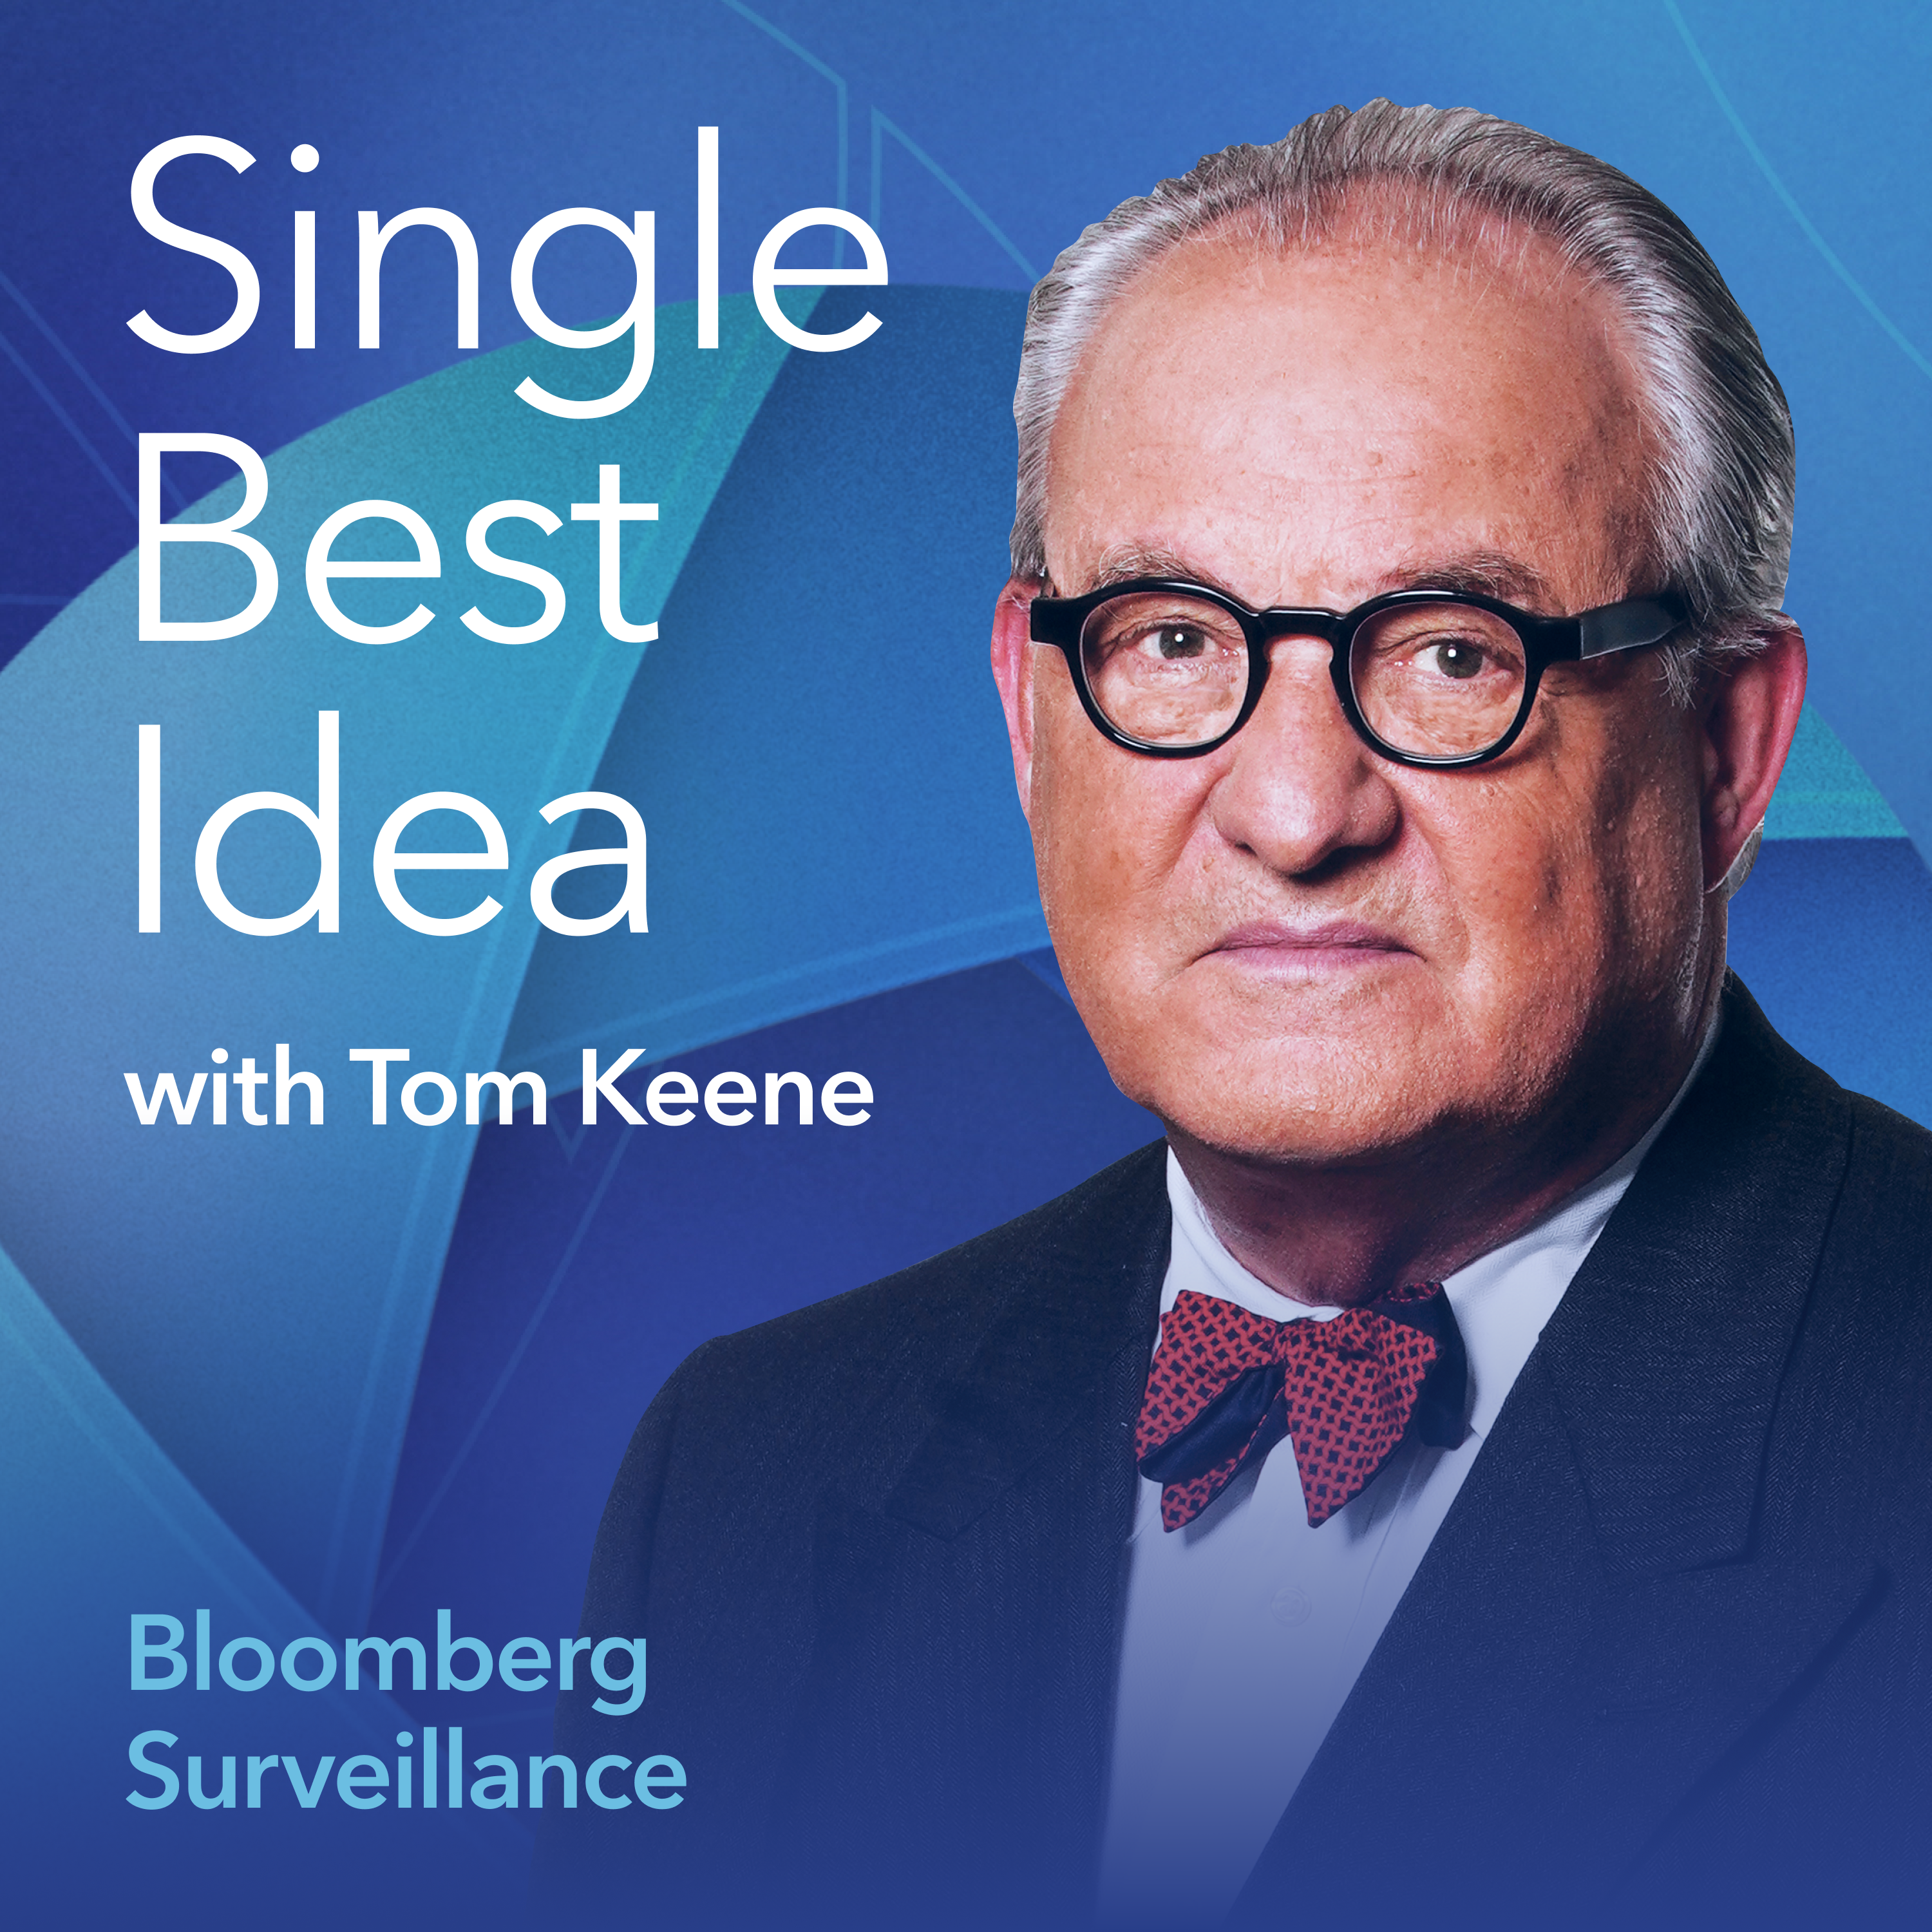 Single Best Idea with Tom Keene: Virginie Maisonneuve, Dan Ives, & Gene Munster.